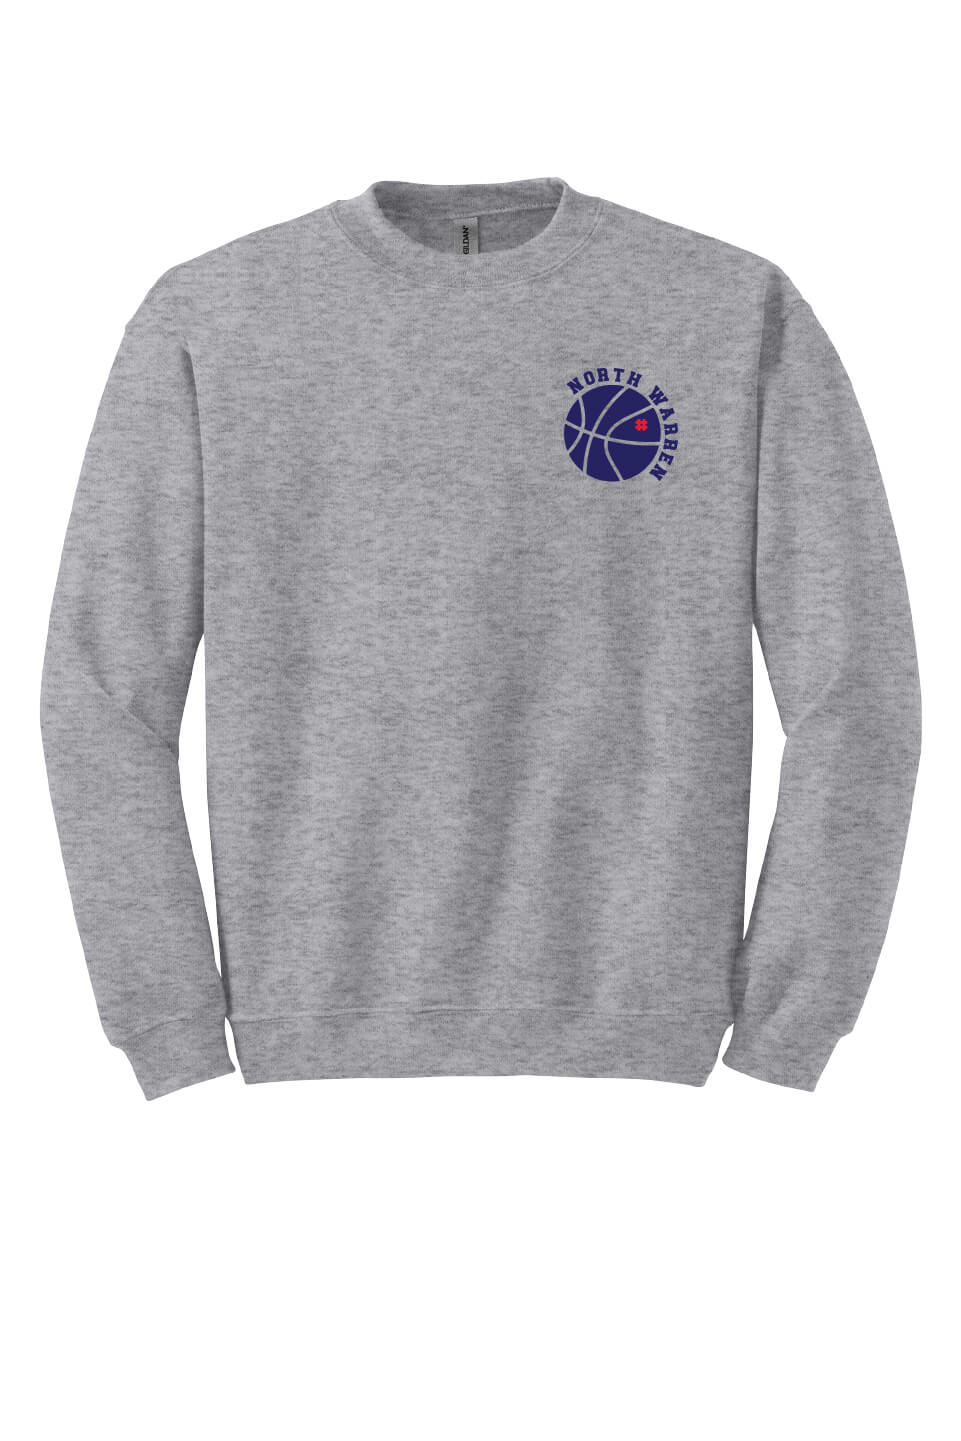 North Warren Basketball Crewneck Sweatshirt (Youth) front, gray